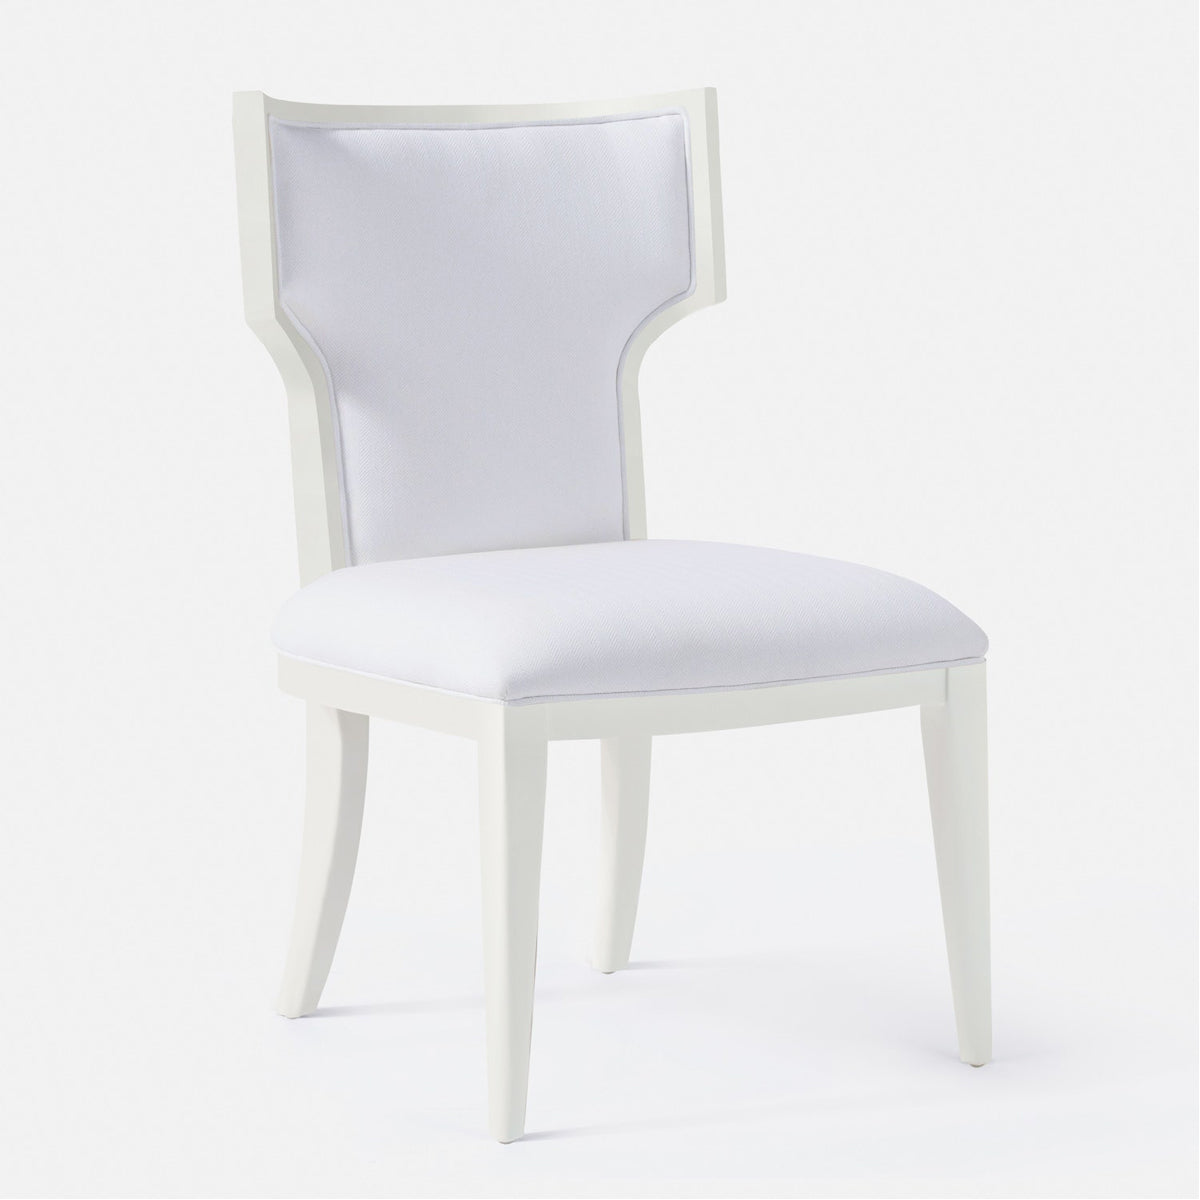 Made Goods Carleen Wingback Dining Chair in Alsek Fabric